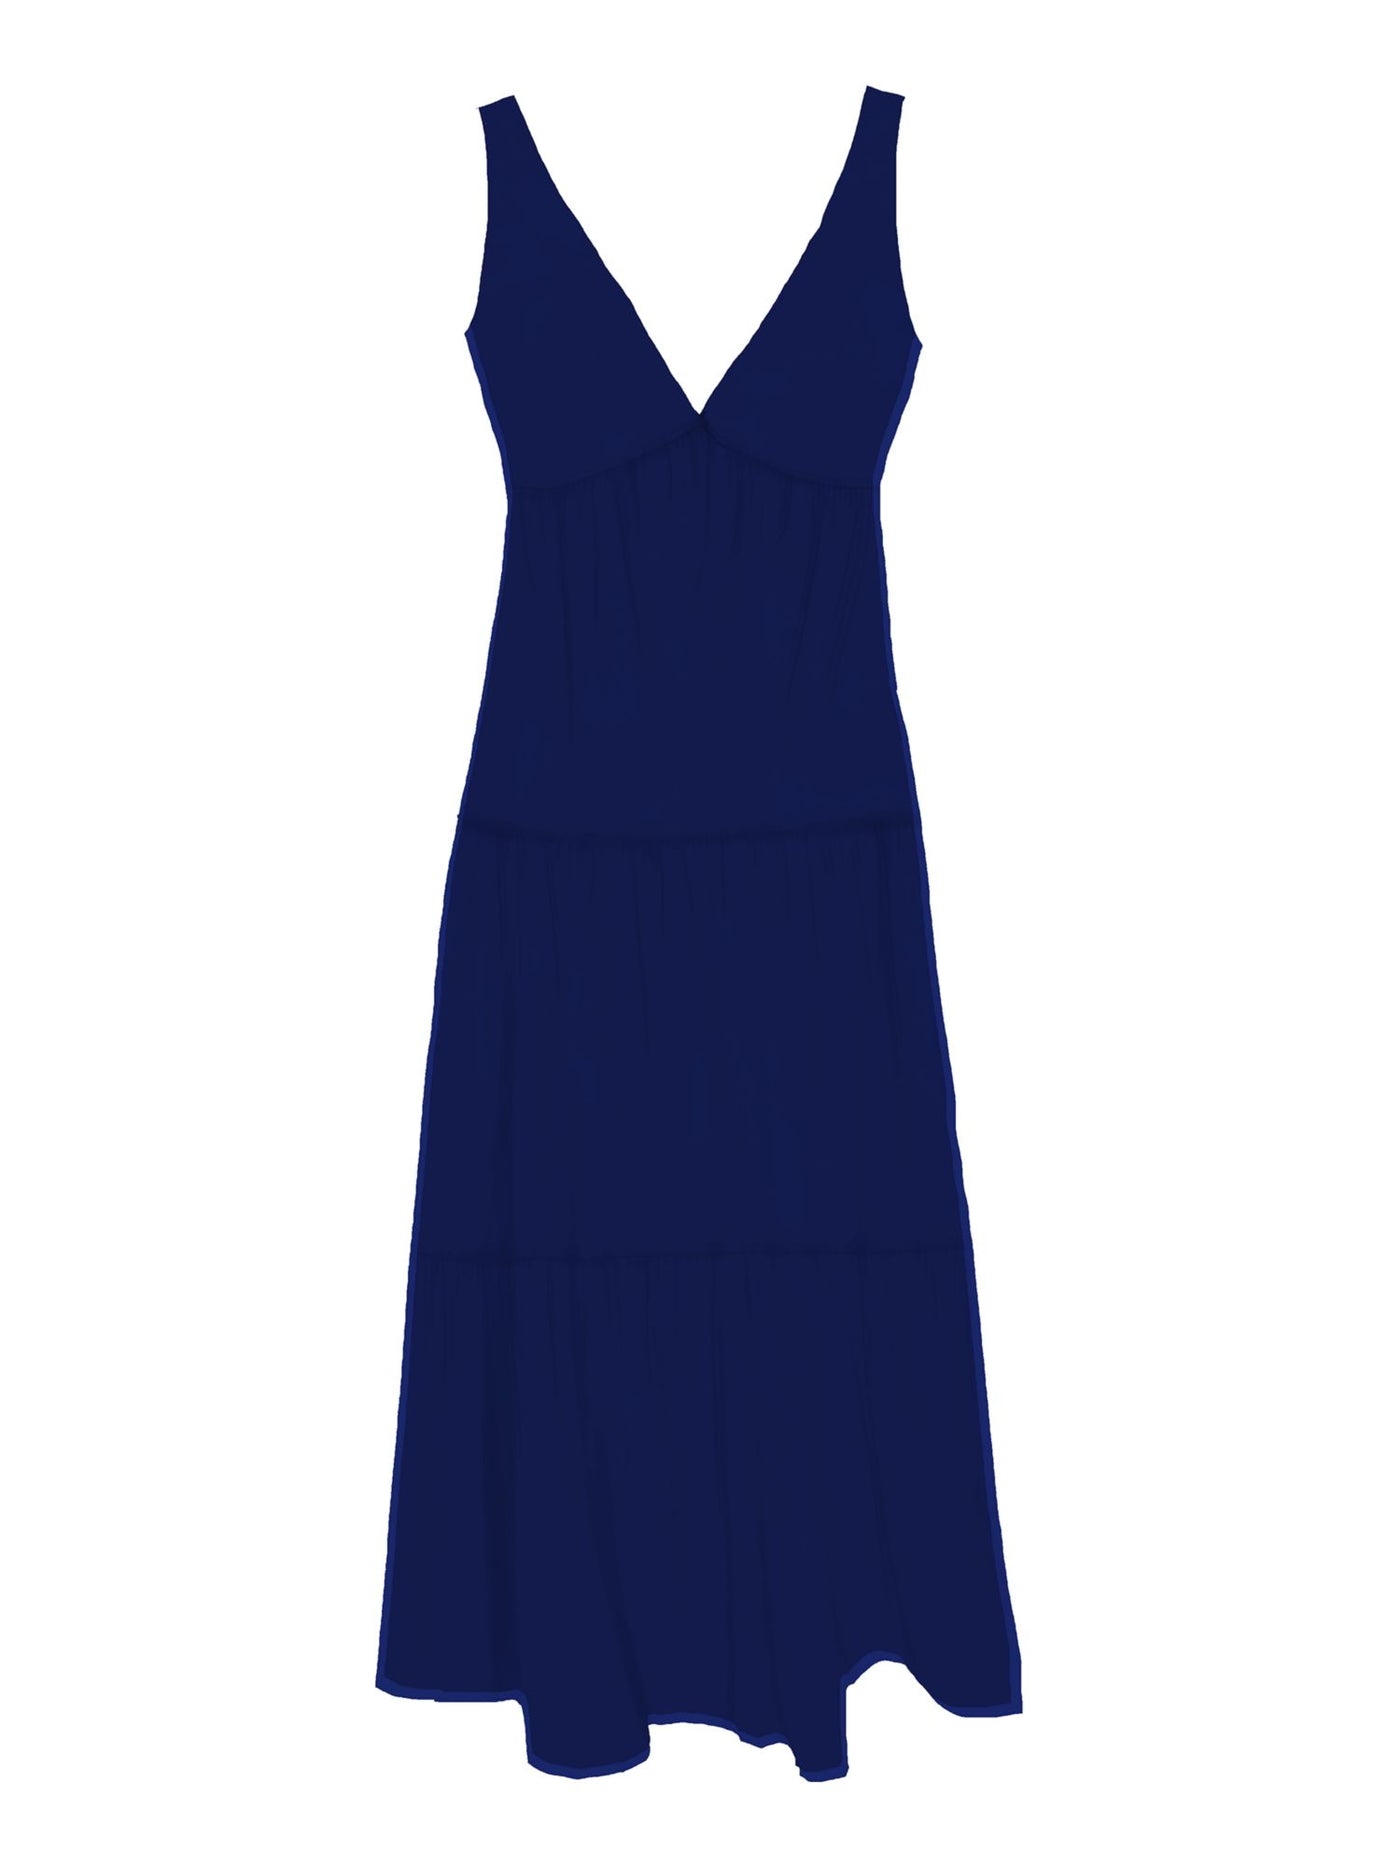 TAYLOR Womens Navy Smocked Sheer Sleeveless V Neck Midi Fit + Flare Dress Petites 4P